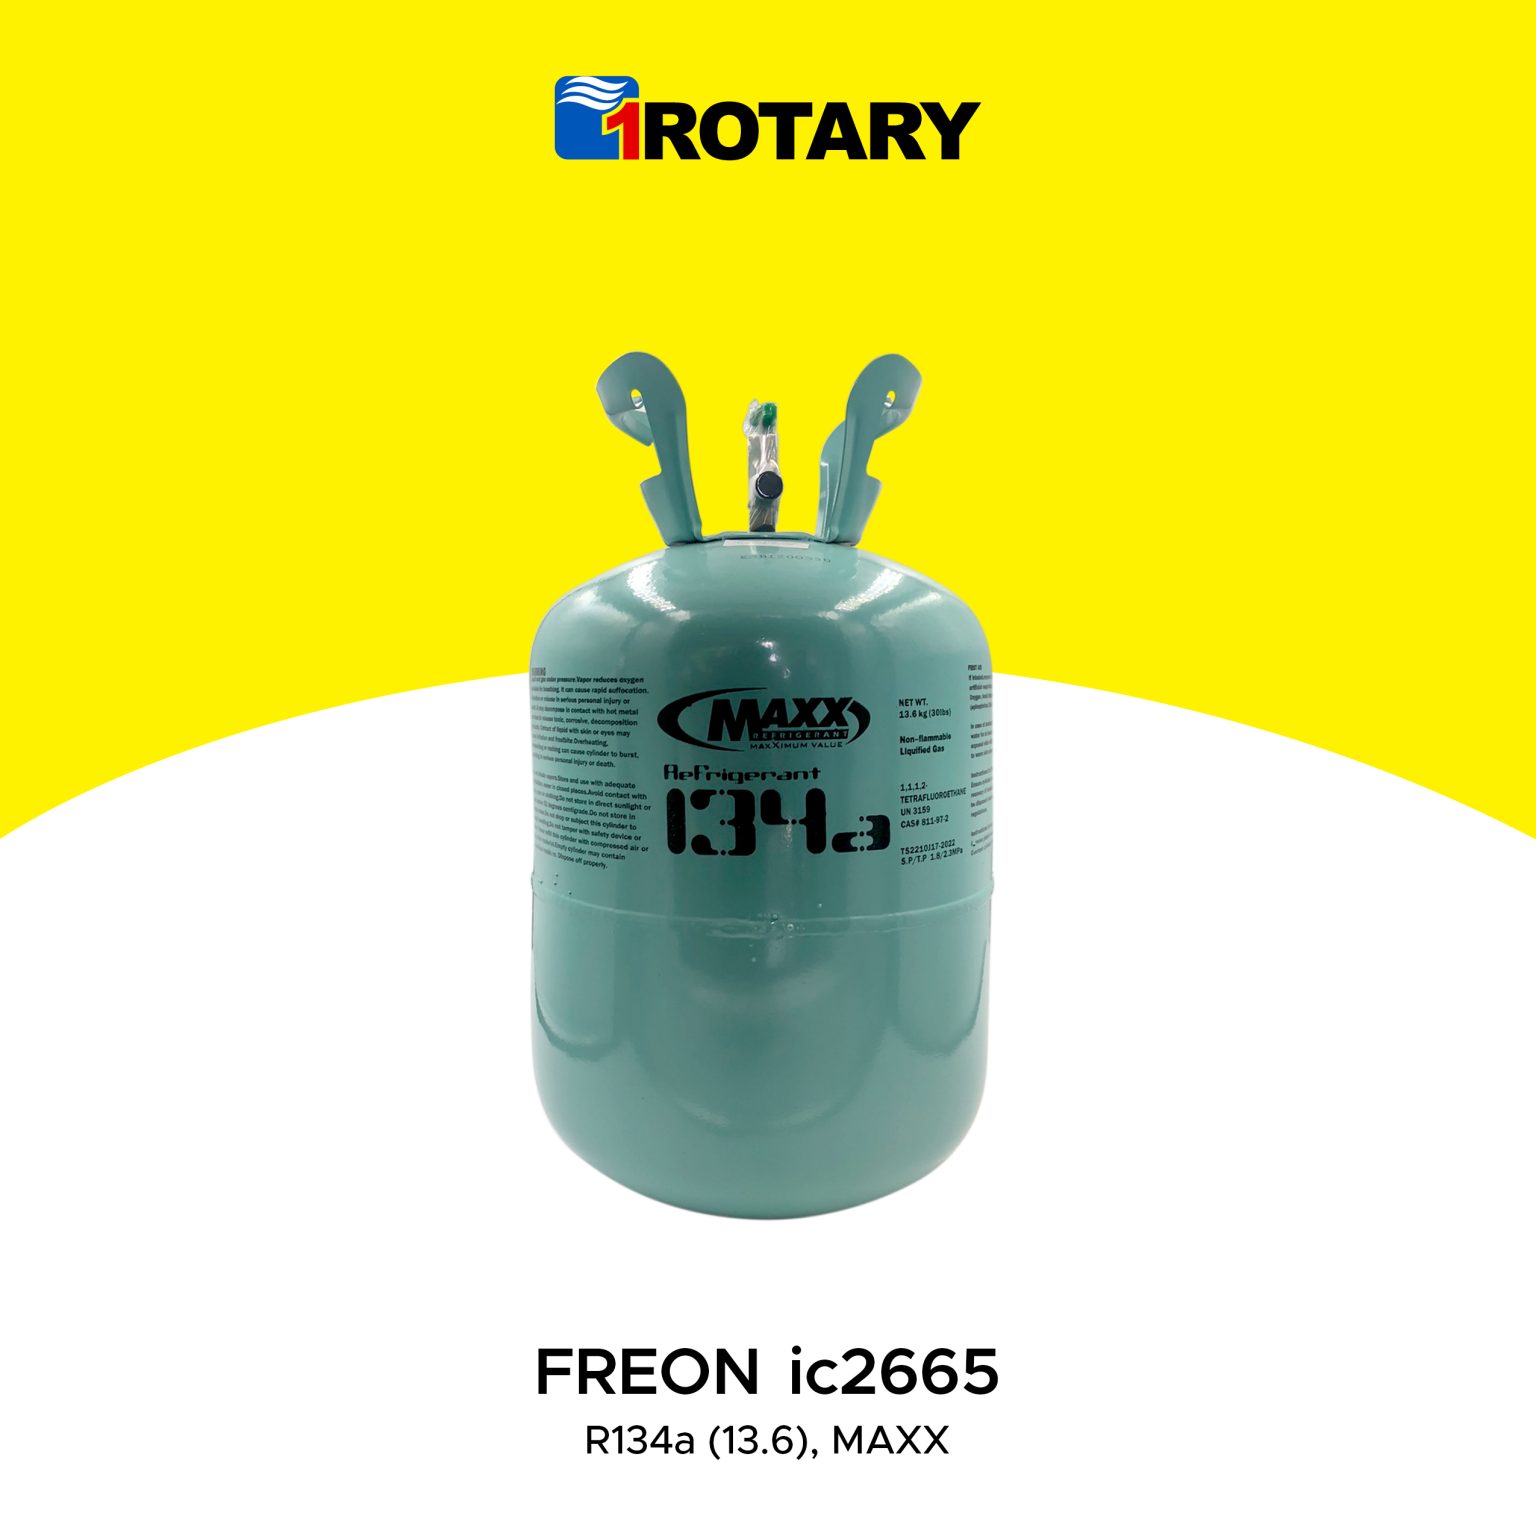 1rotary Maxx R134a Refrigerant Freon 136kg Ic2665 1rotary